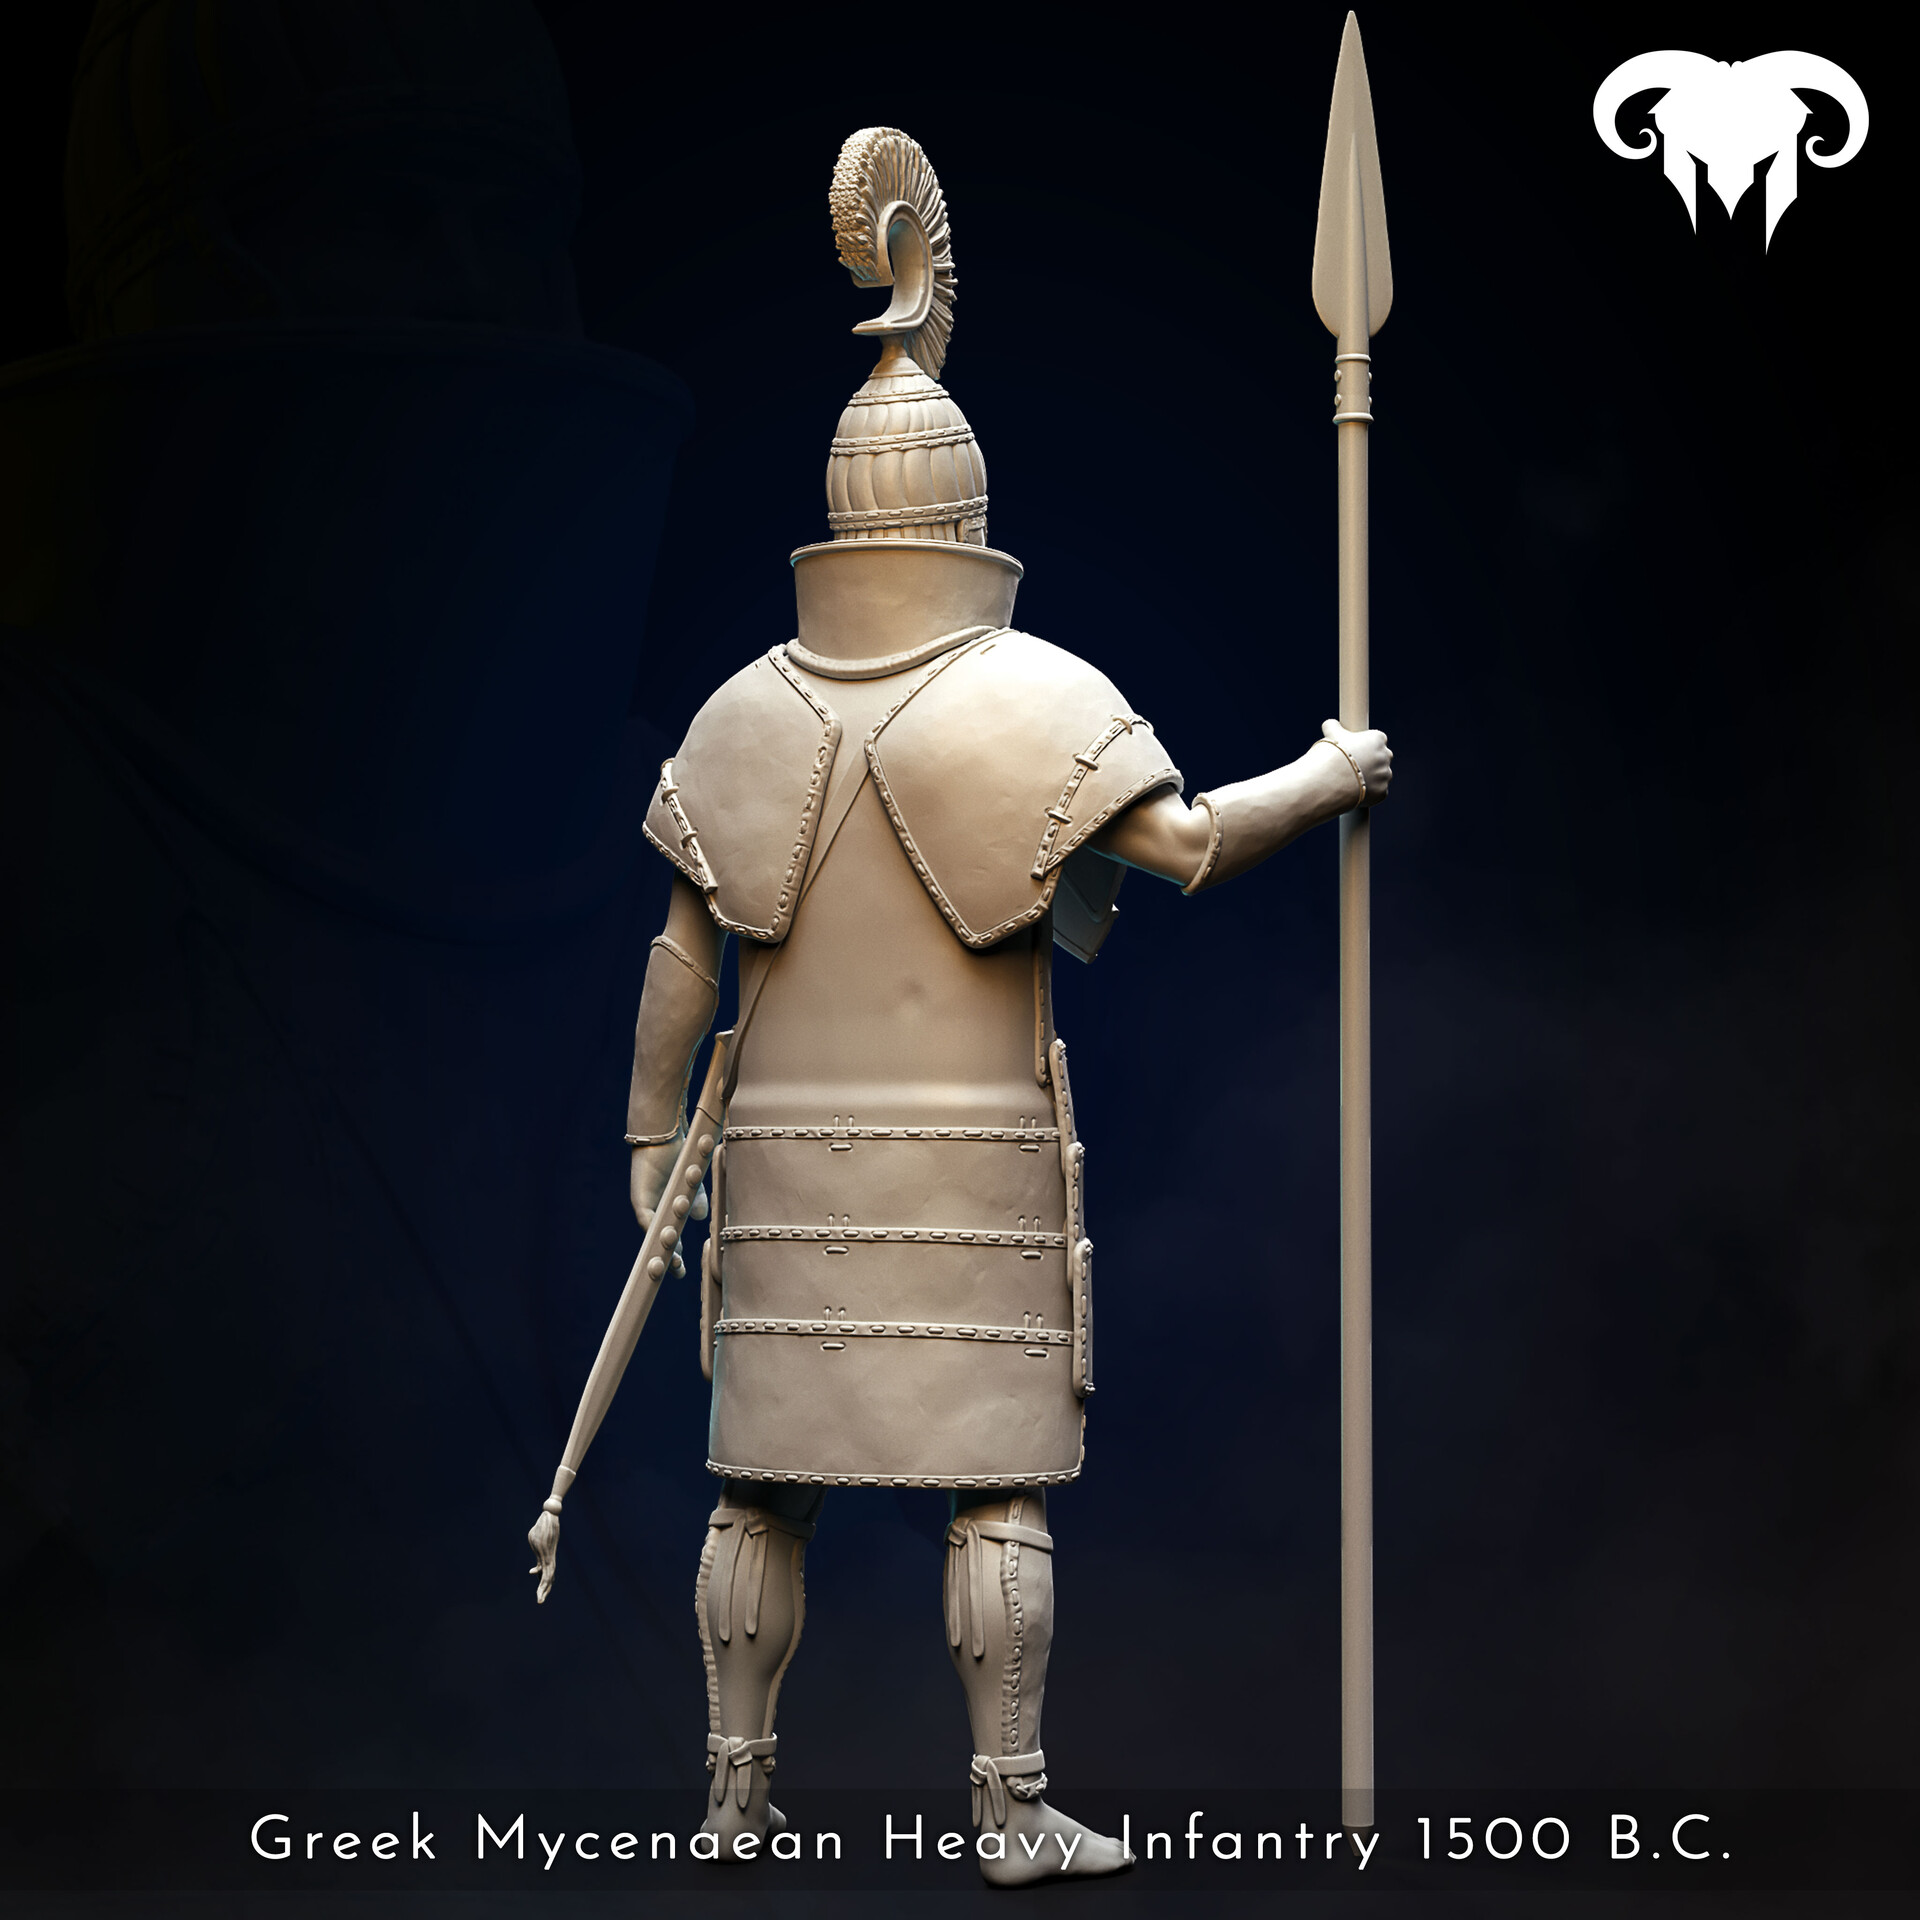 Greek Mycenaean Heavy Infantry 1500 B.C. Palace Guard!